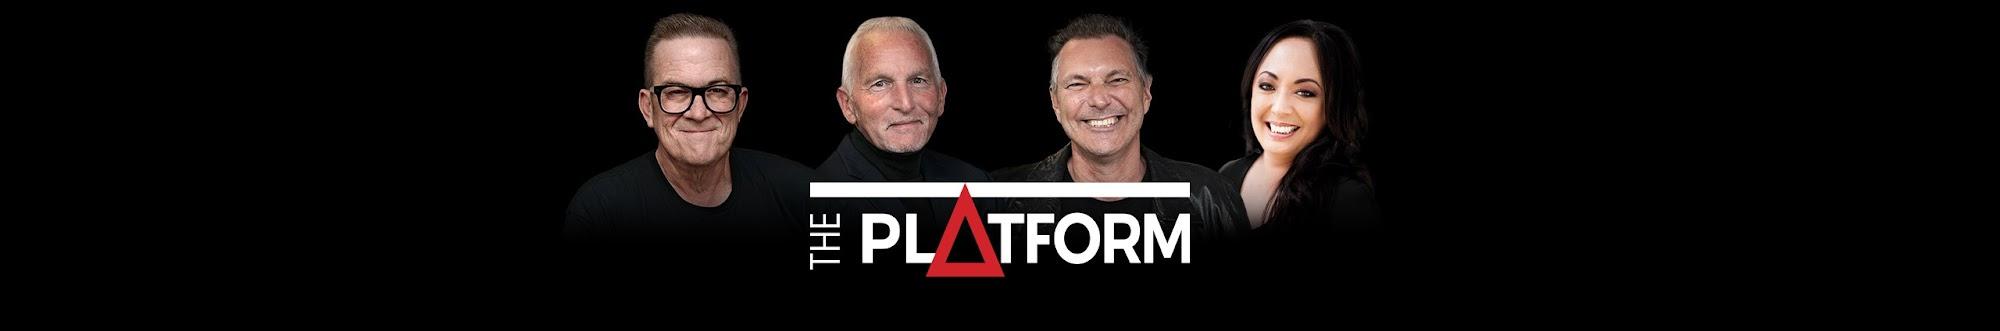 The Platform NZ